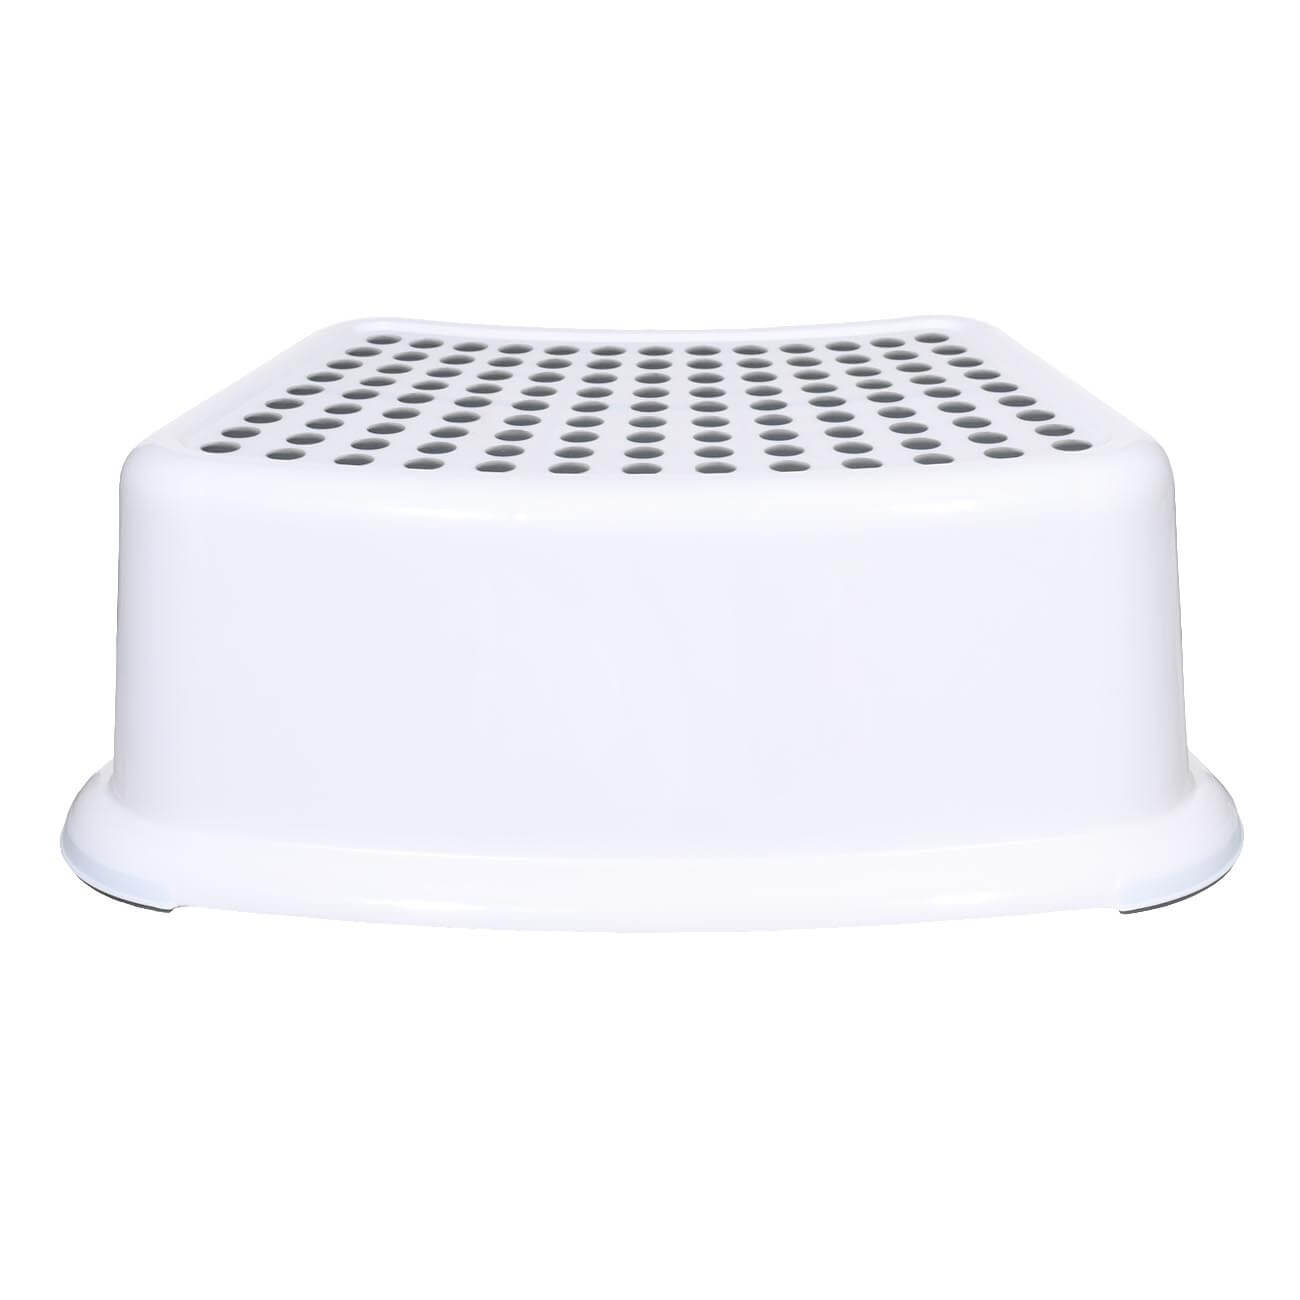 Табурет-подставка, 24х36 см, пластик/резина, бело-серый, Polka dot подставка под монитор